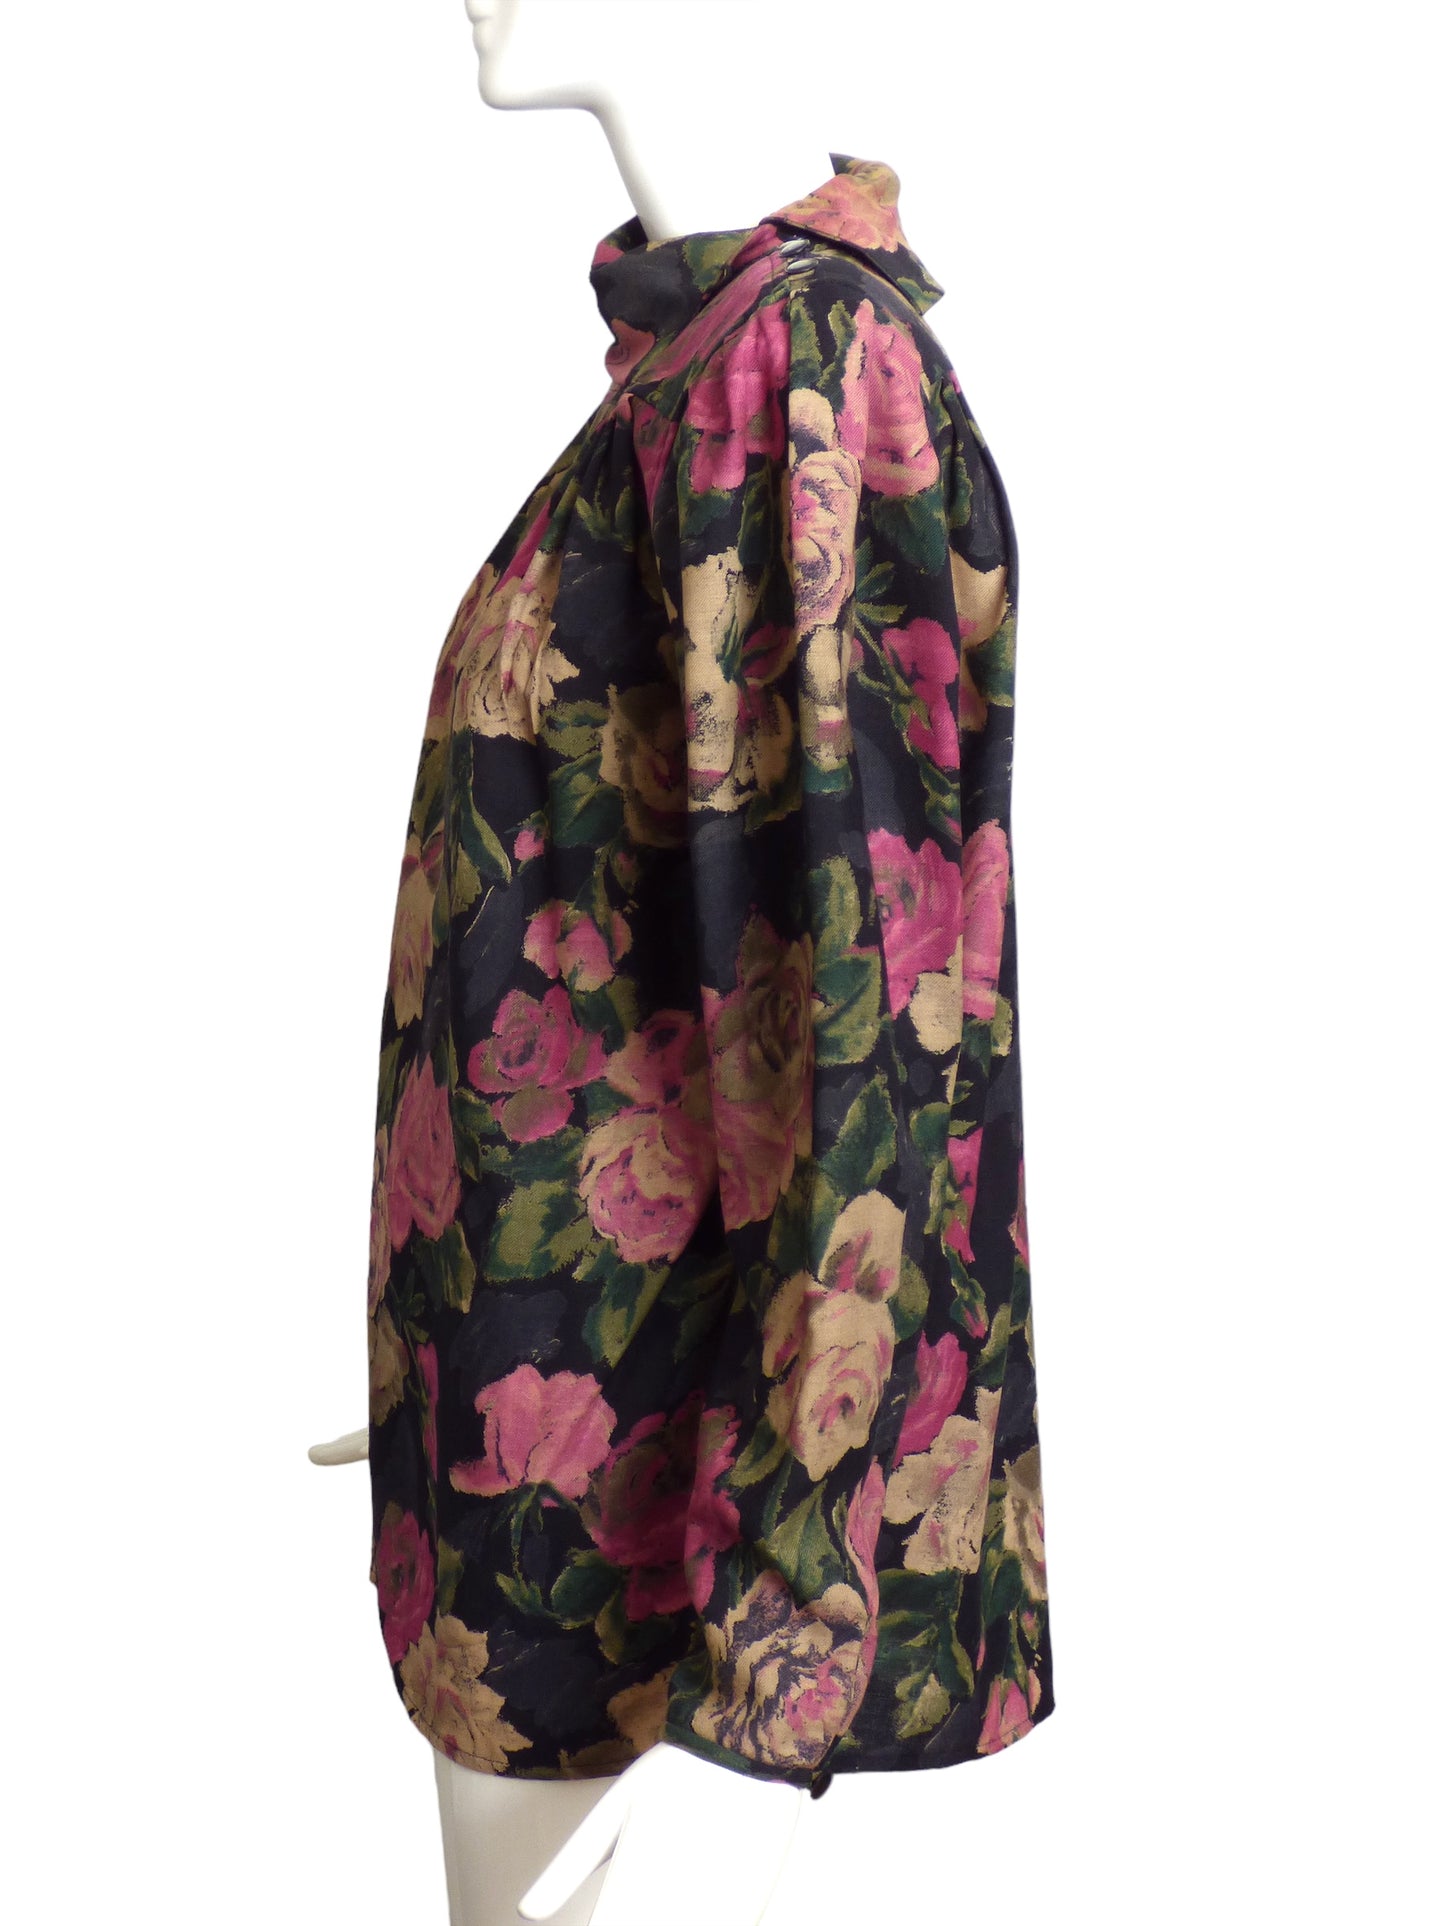 EMANUEL UNGARO- 1980s Floral Print Wool Blouse, Size 8